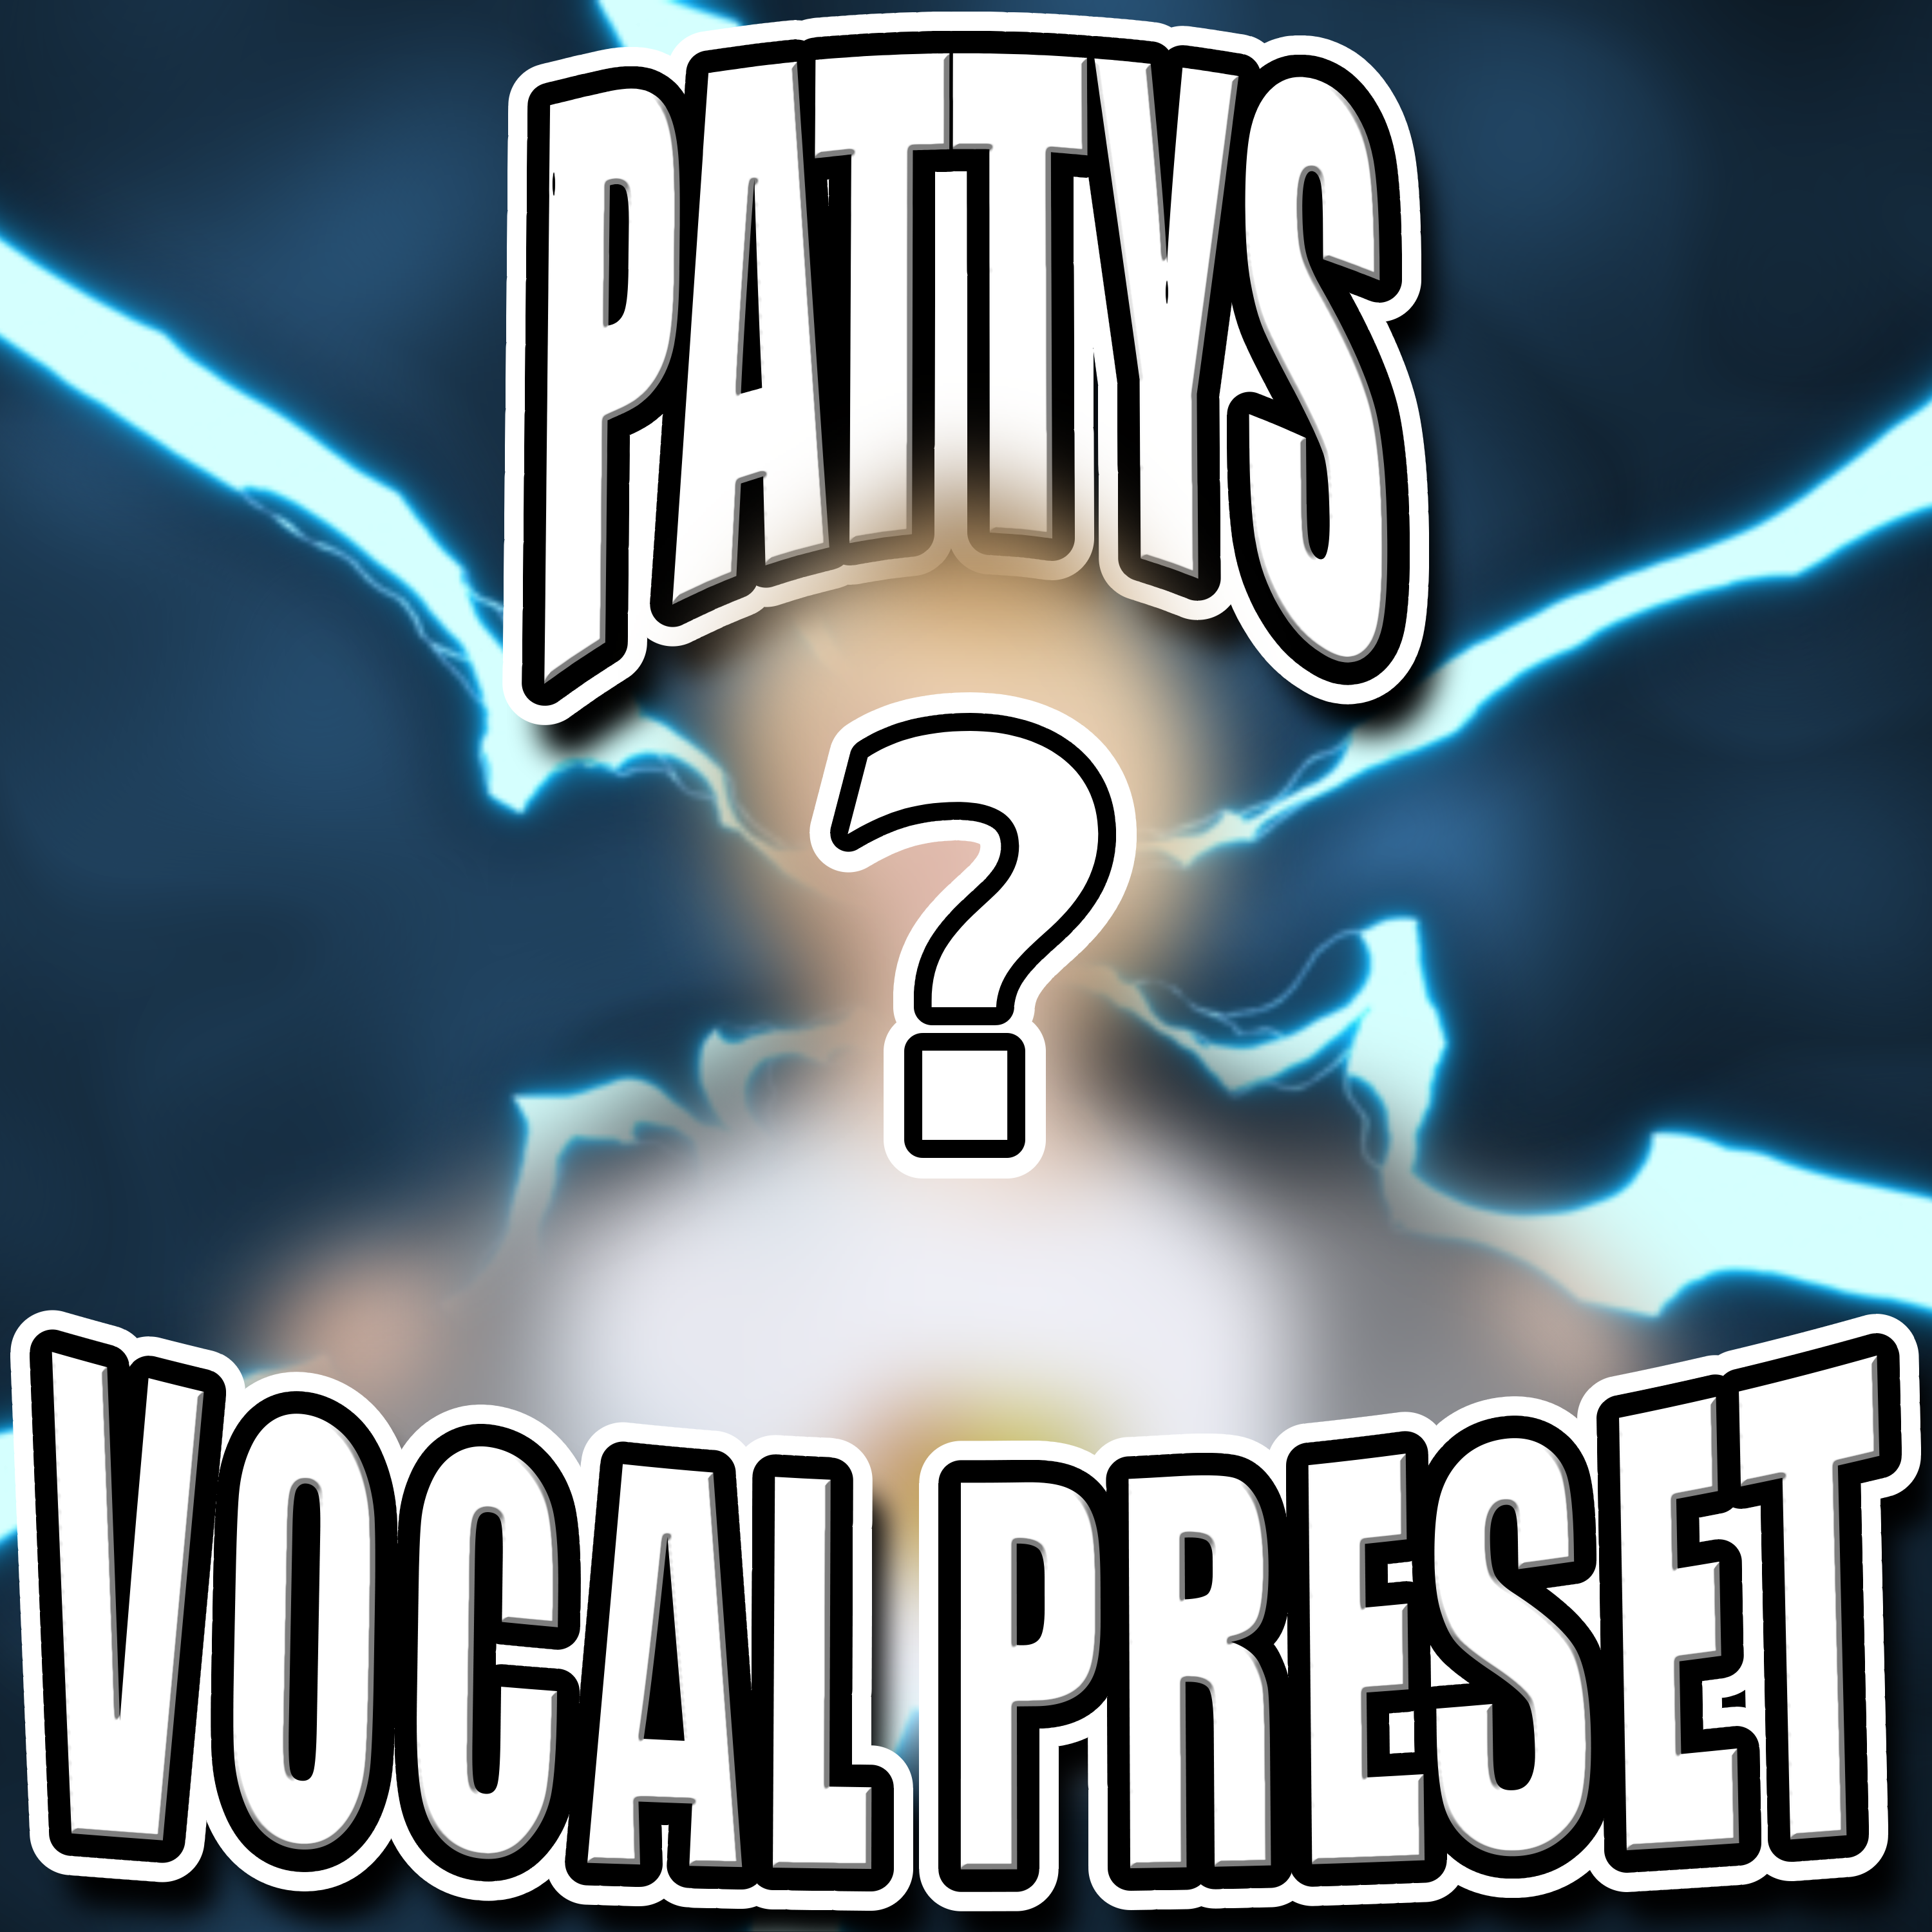 Pattys Vocal Preset